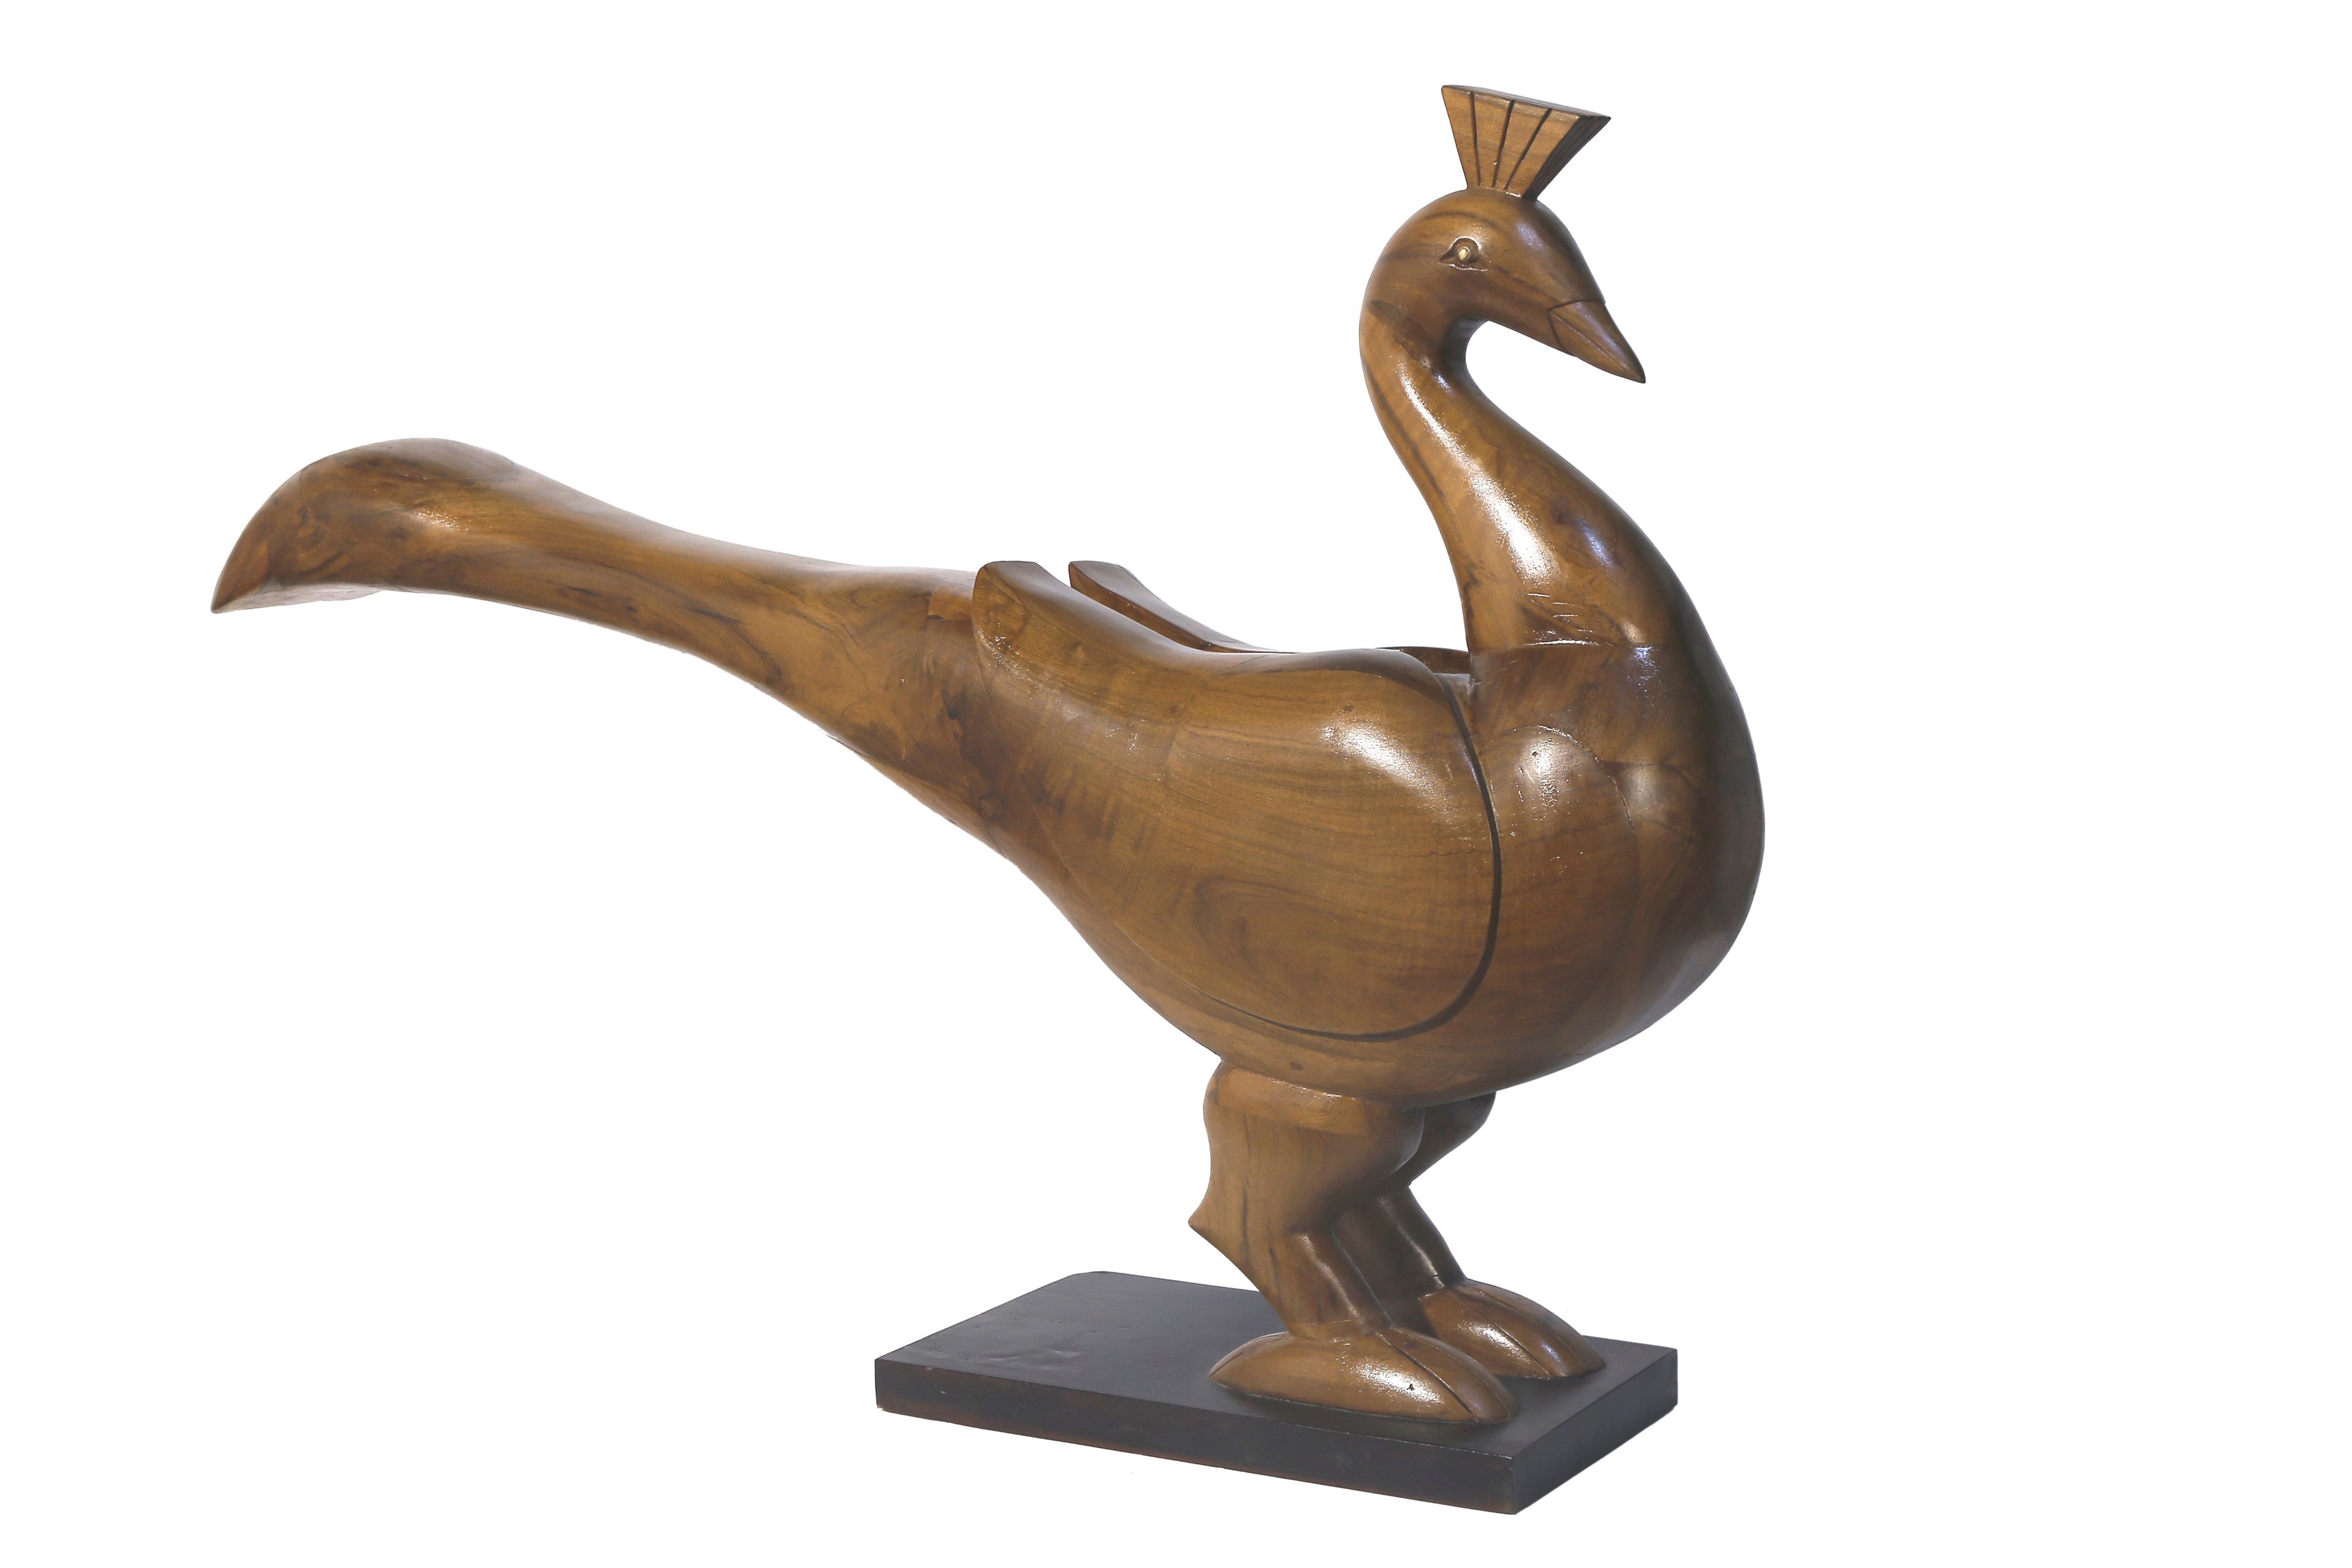 Wooden Peacock Showpiece Animal Figurine